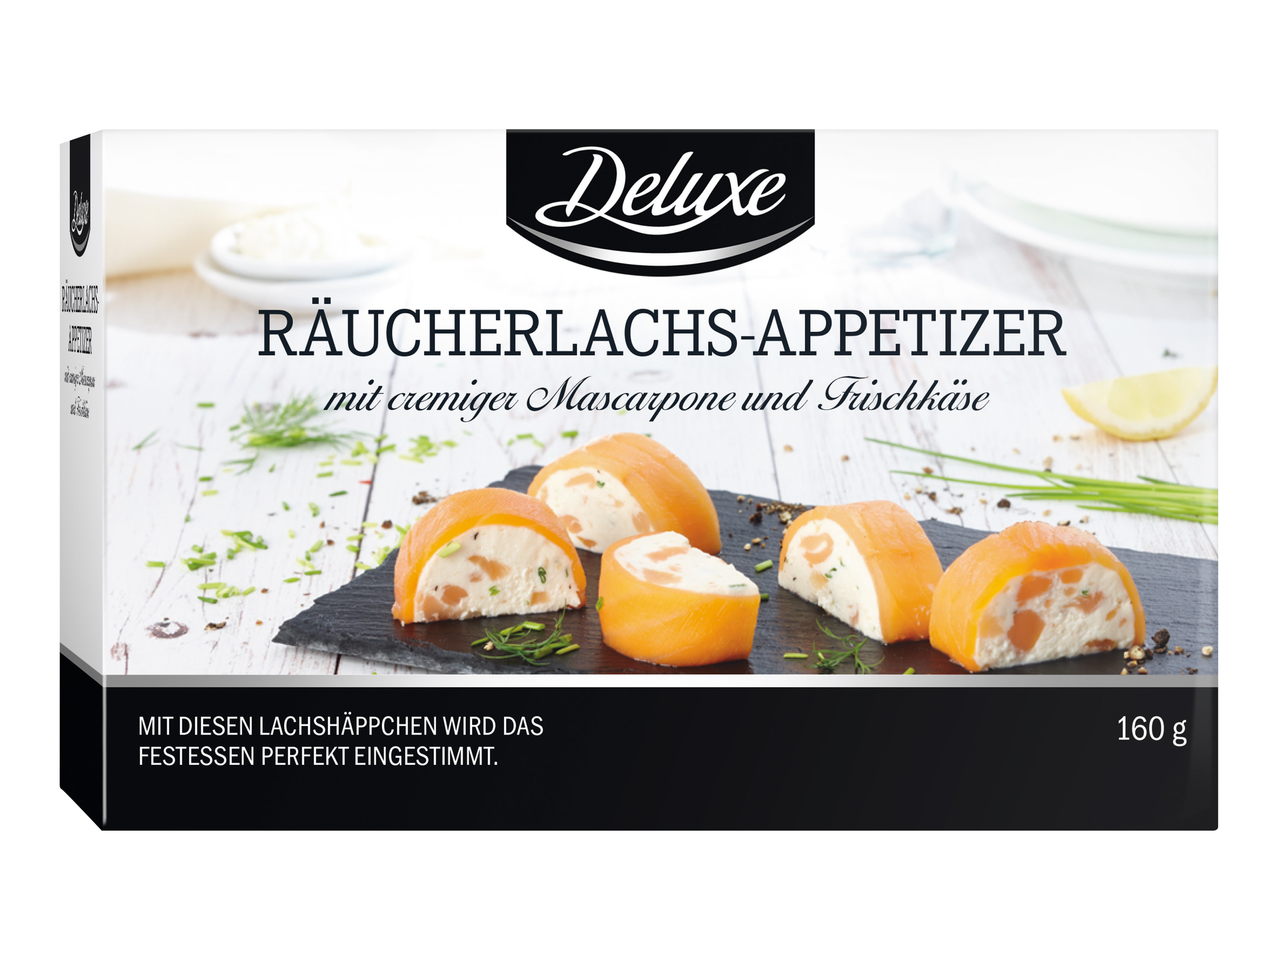 Räucherlachs-Appetizer